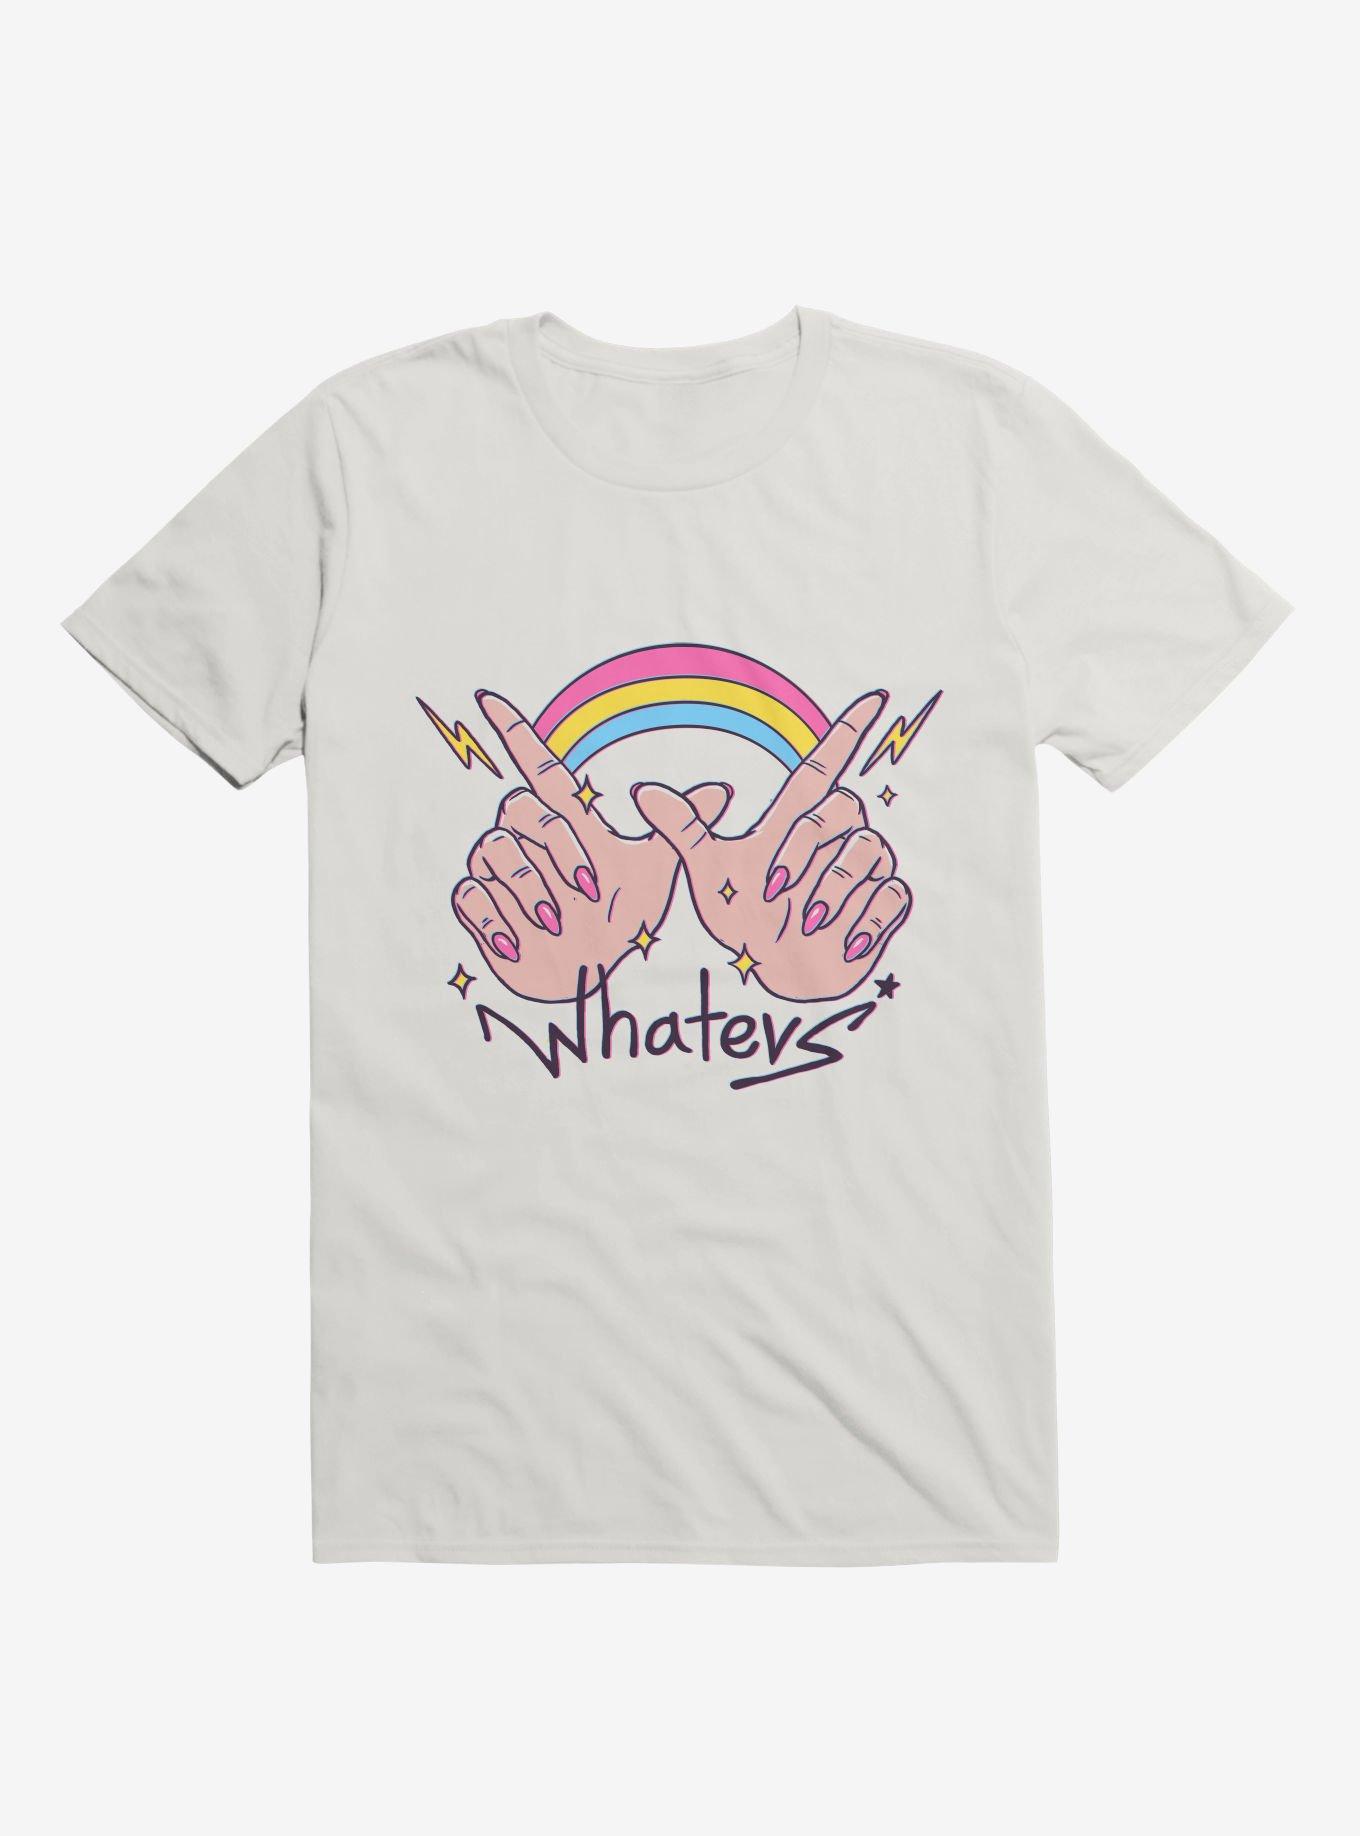 Rainbow Whatevs! White T-Shirt